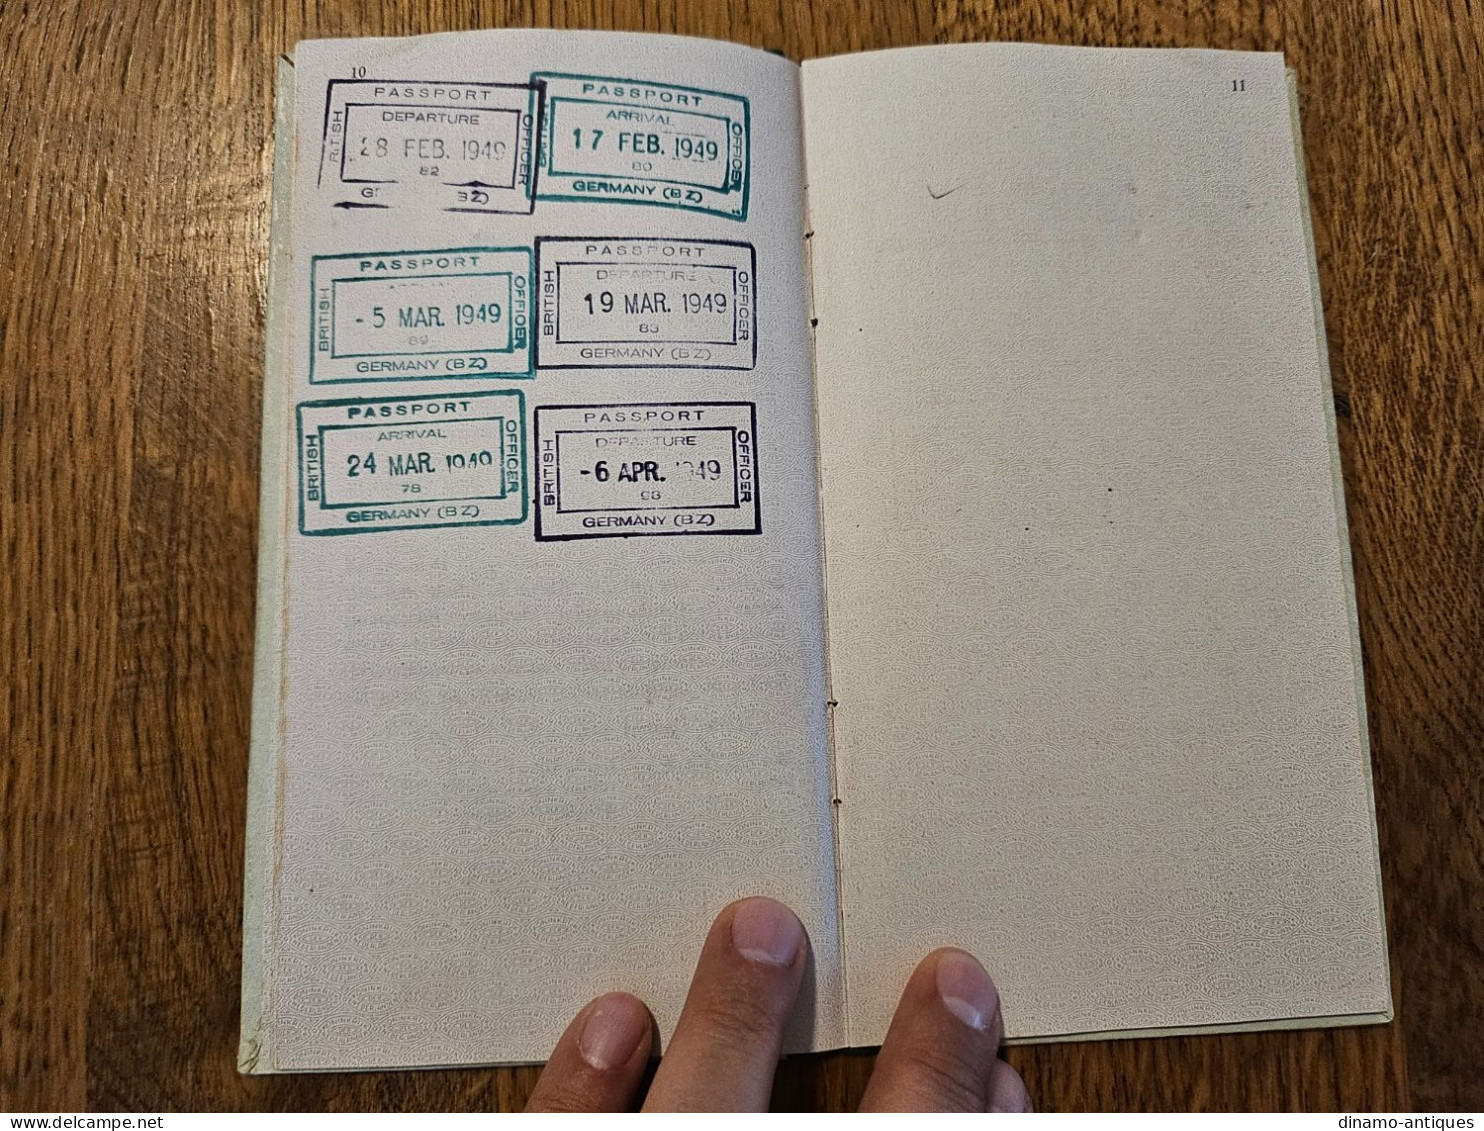 1949 Netherlands passport passeport reisepass issued in Rotterdam to travel to AMG Germany